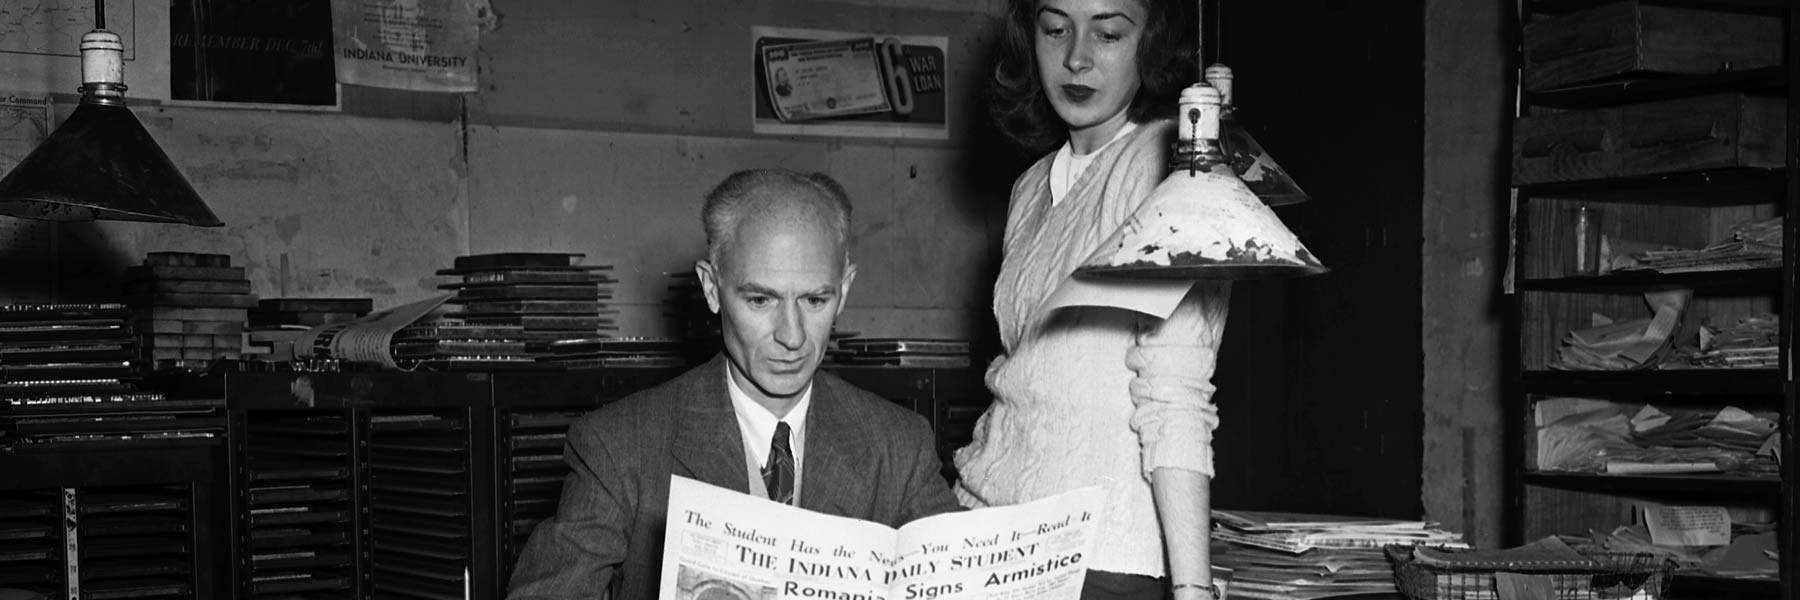 Journalist Ernie Pyle reading a newspaper